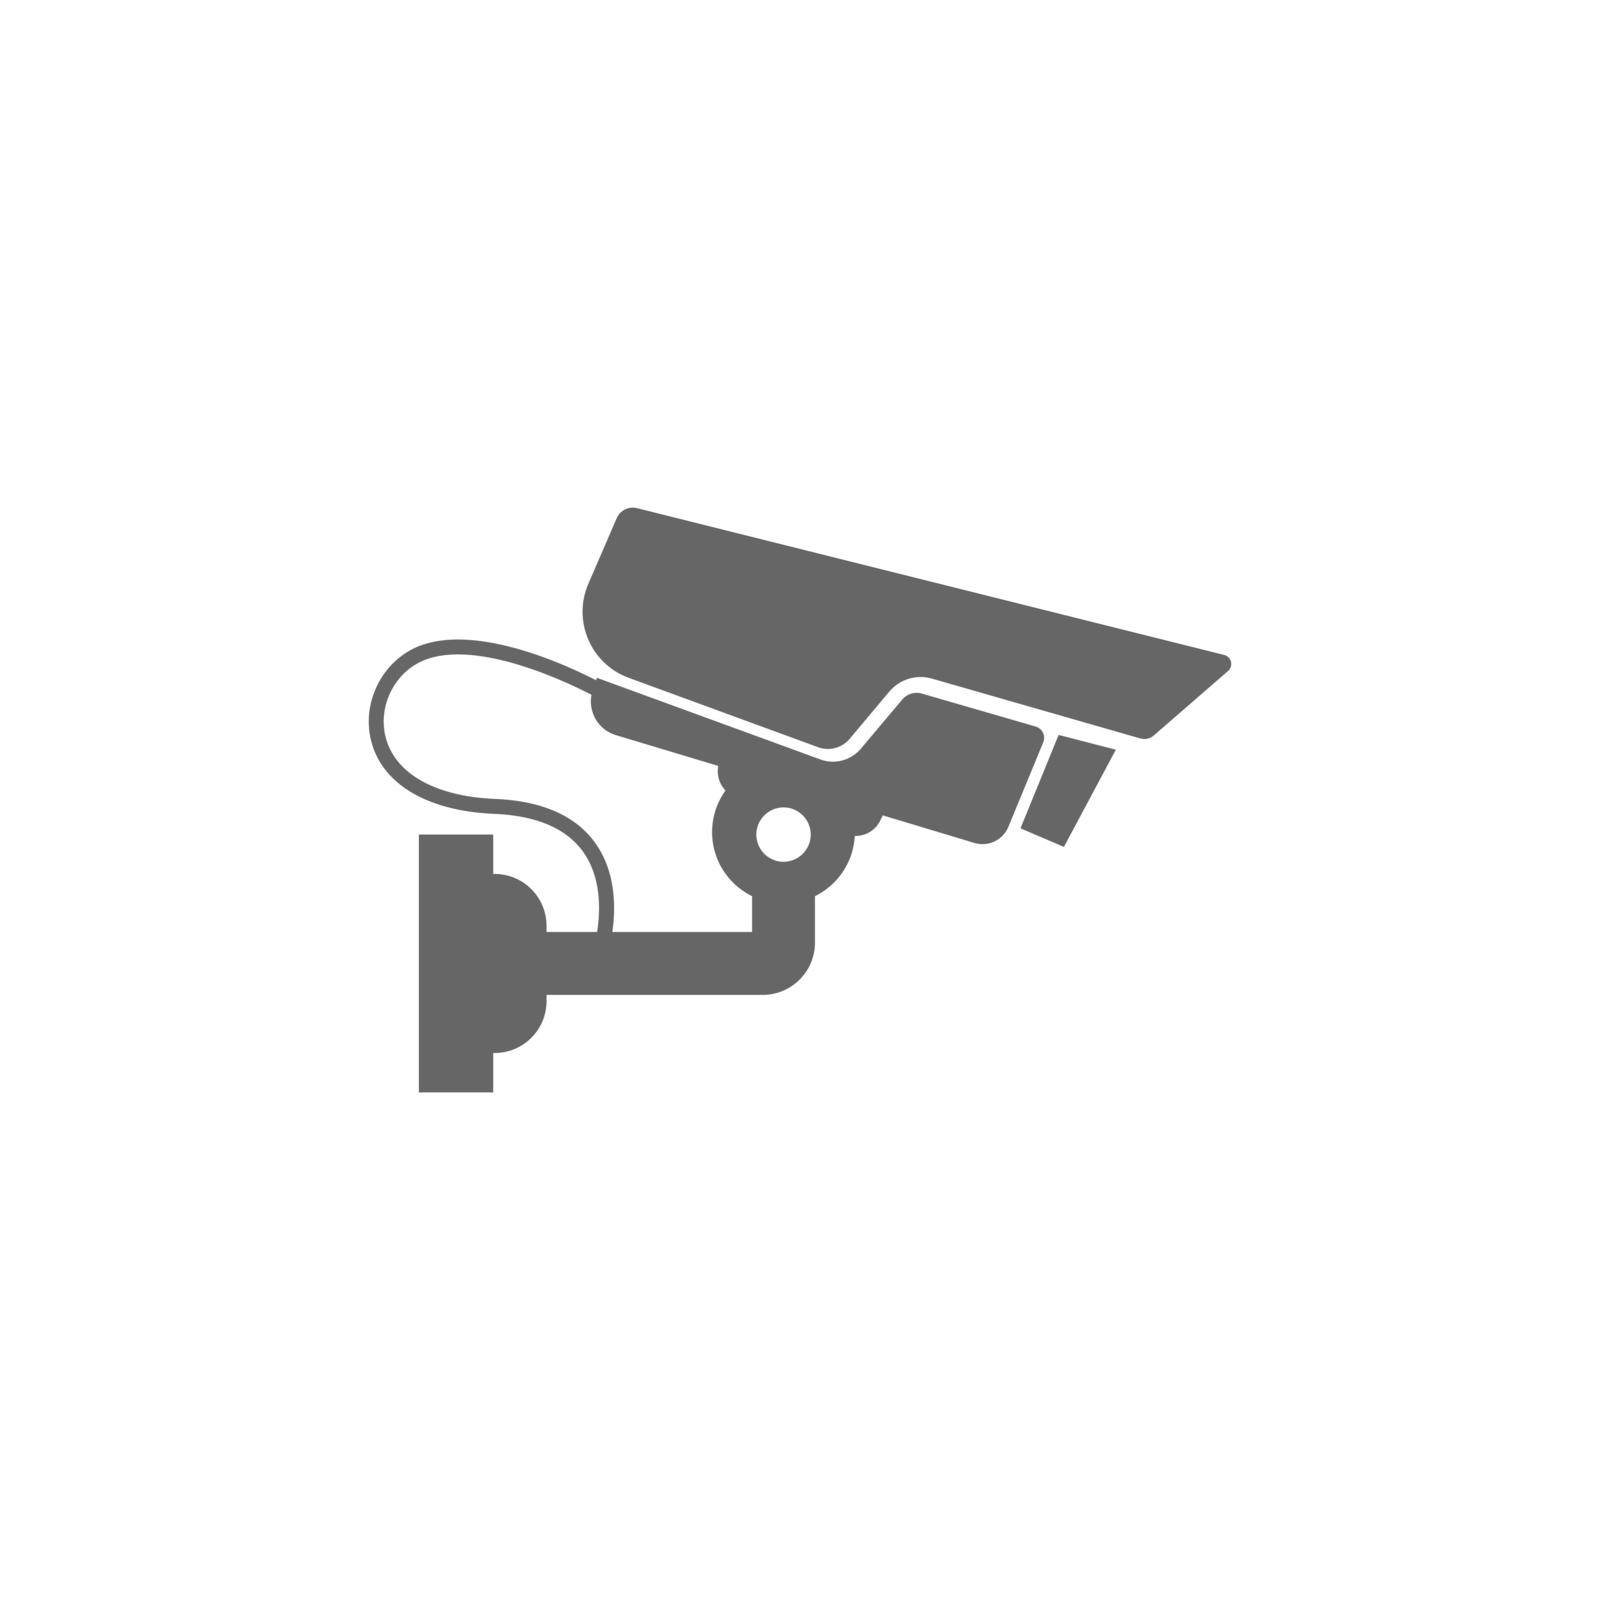 CCTV icon flat design illustration template vector